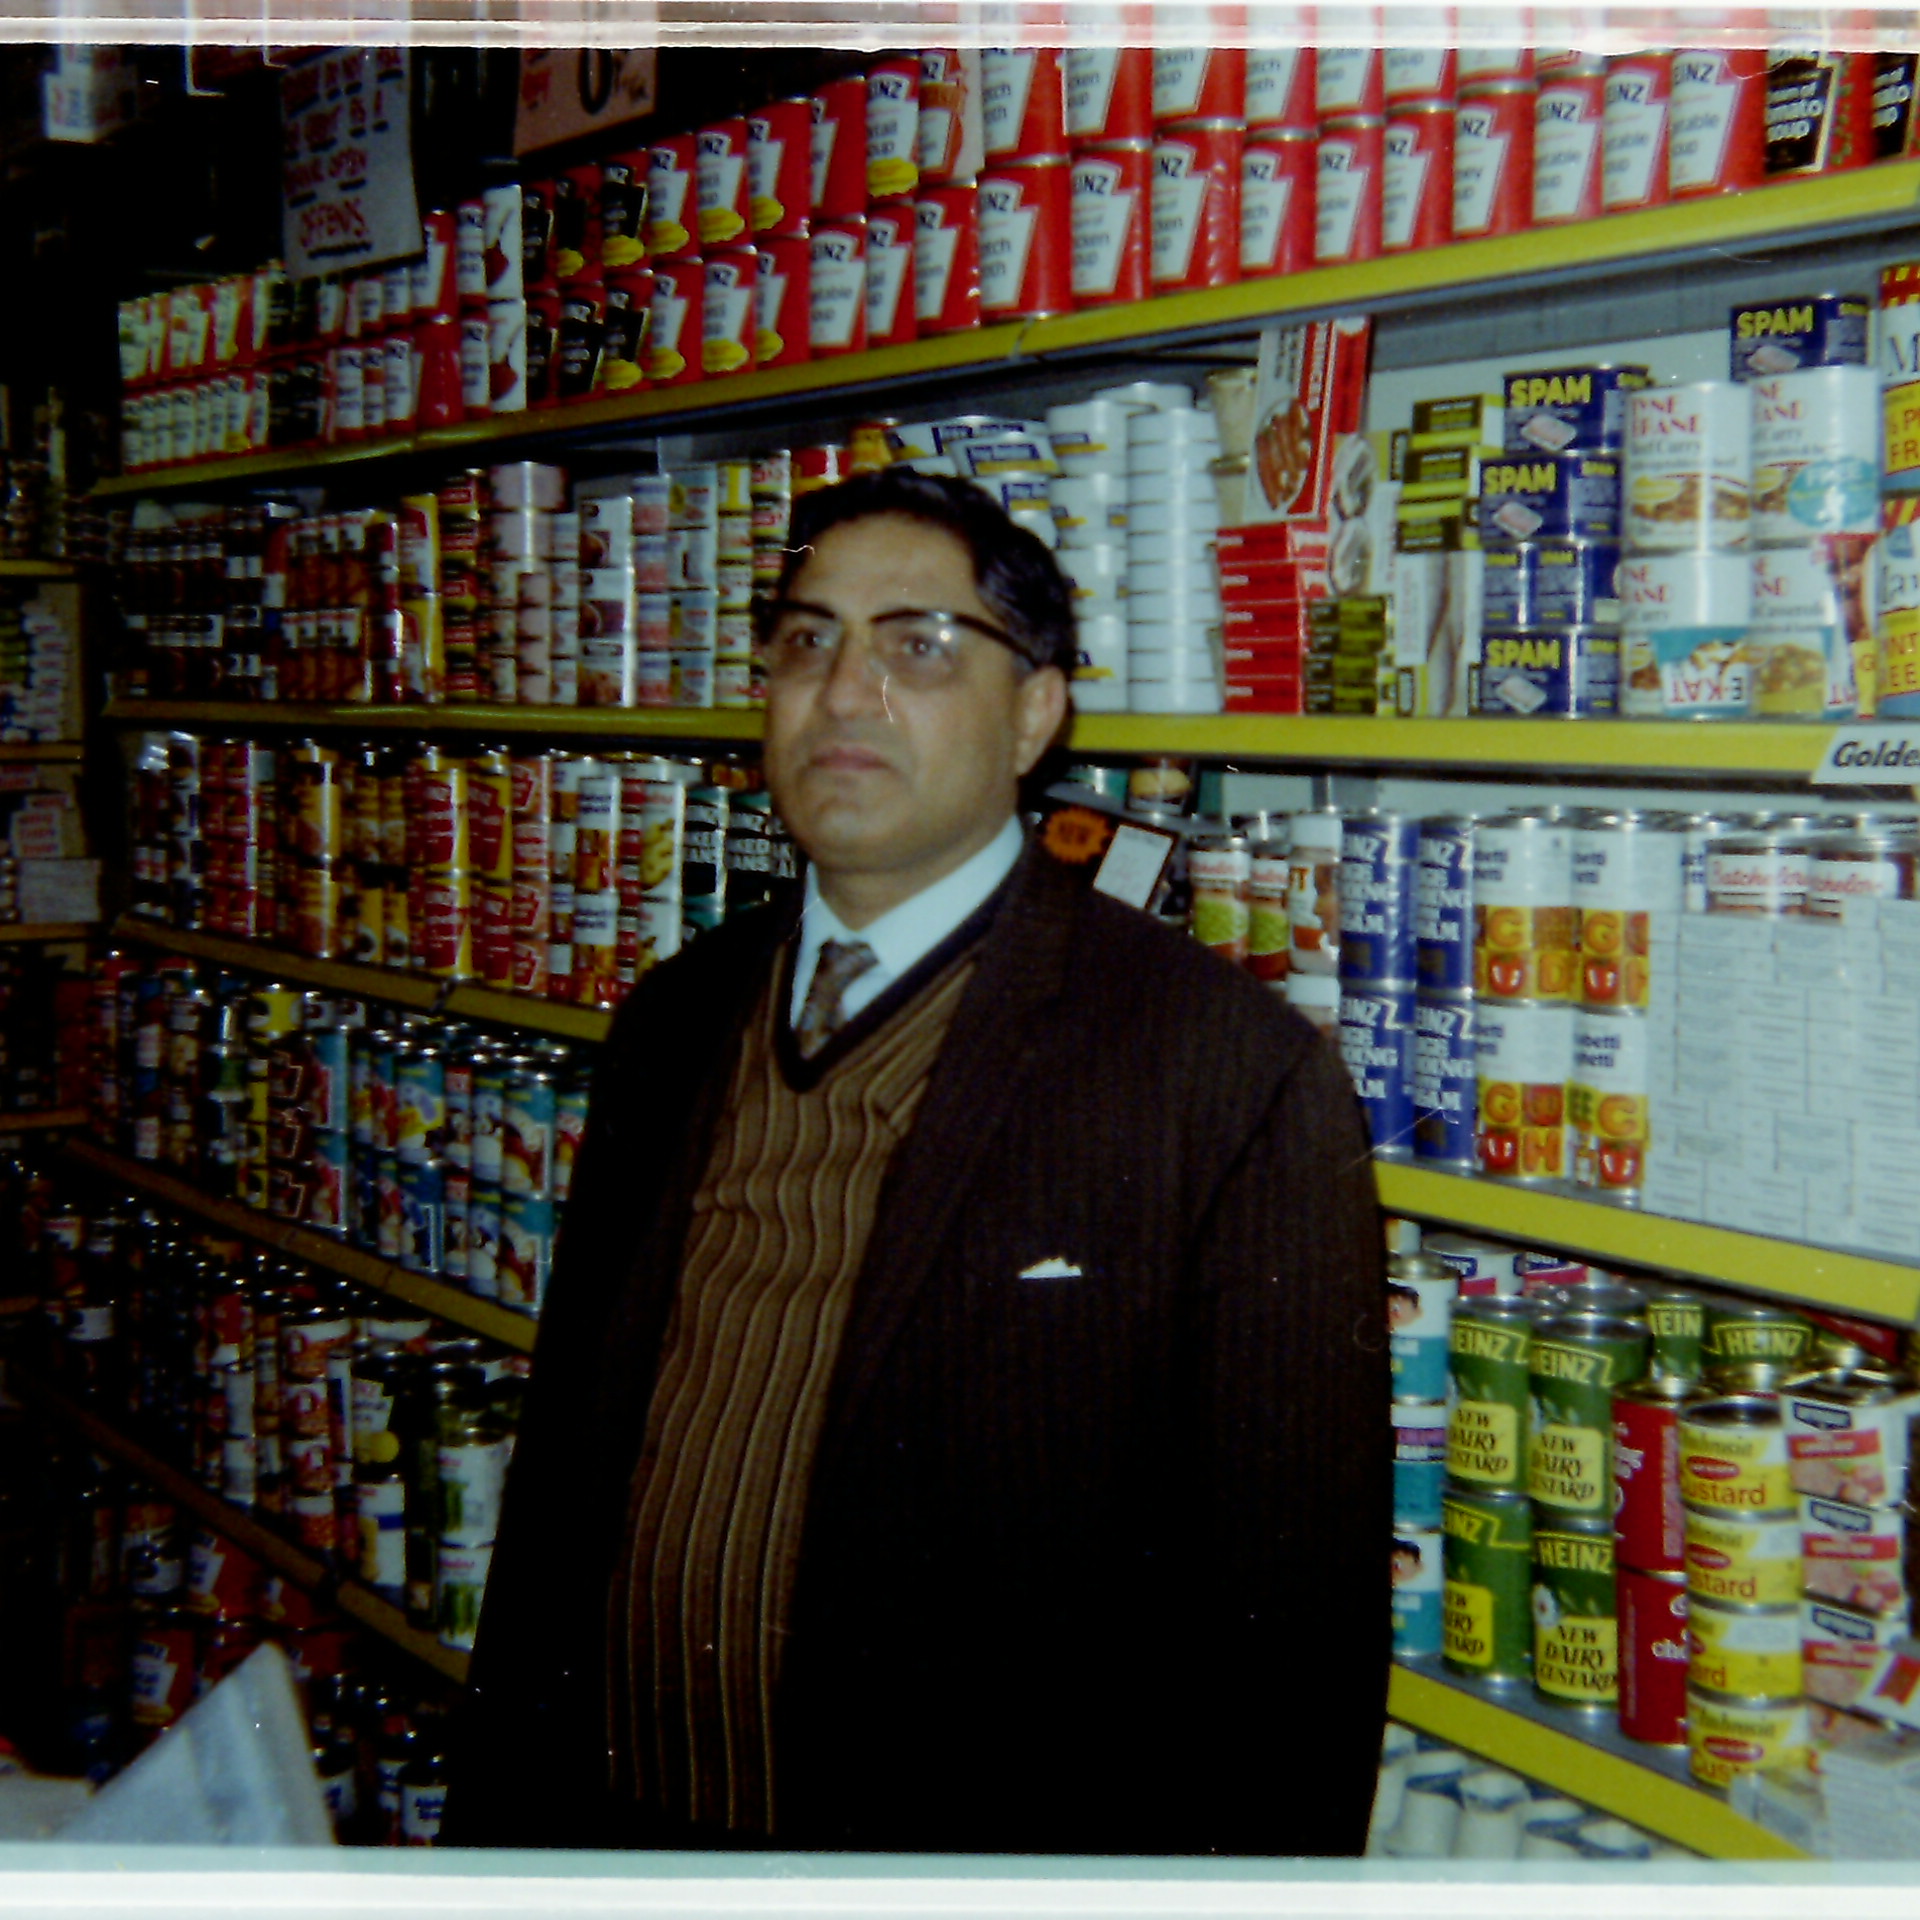 Fateh Ali standing in his store